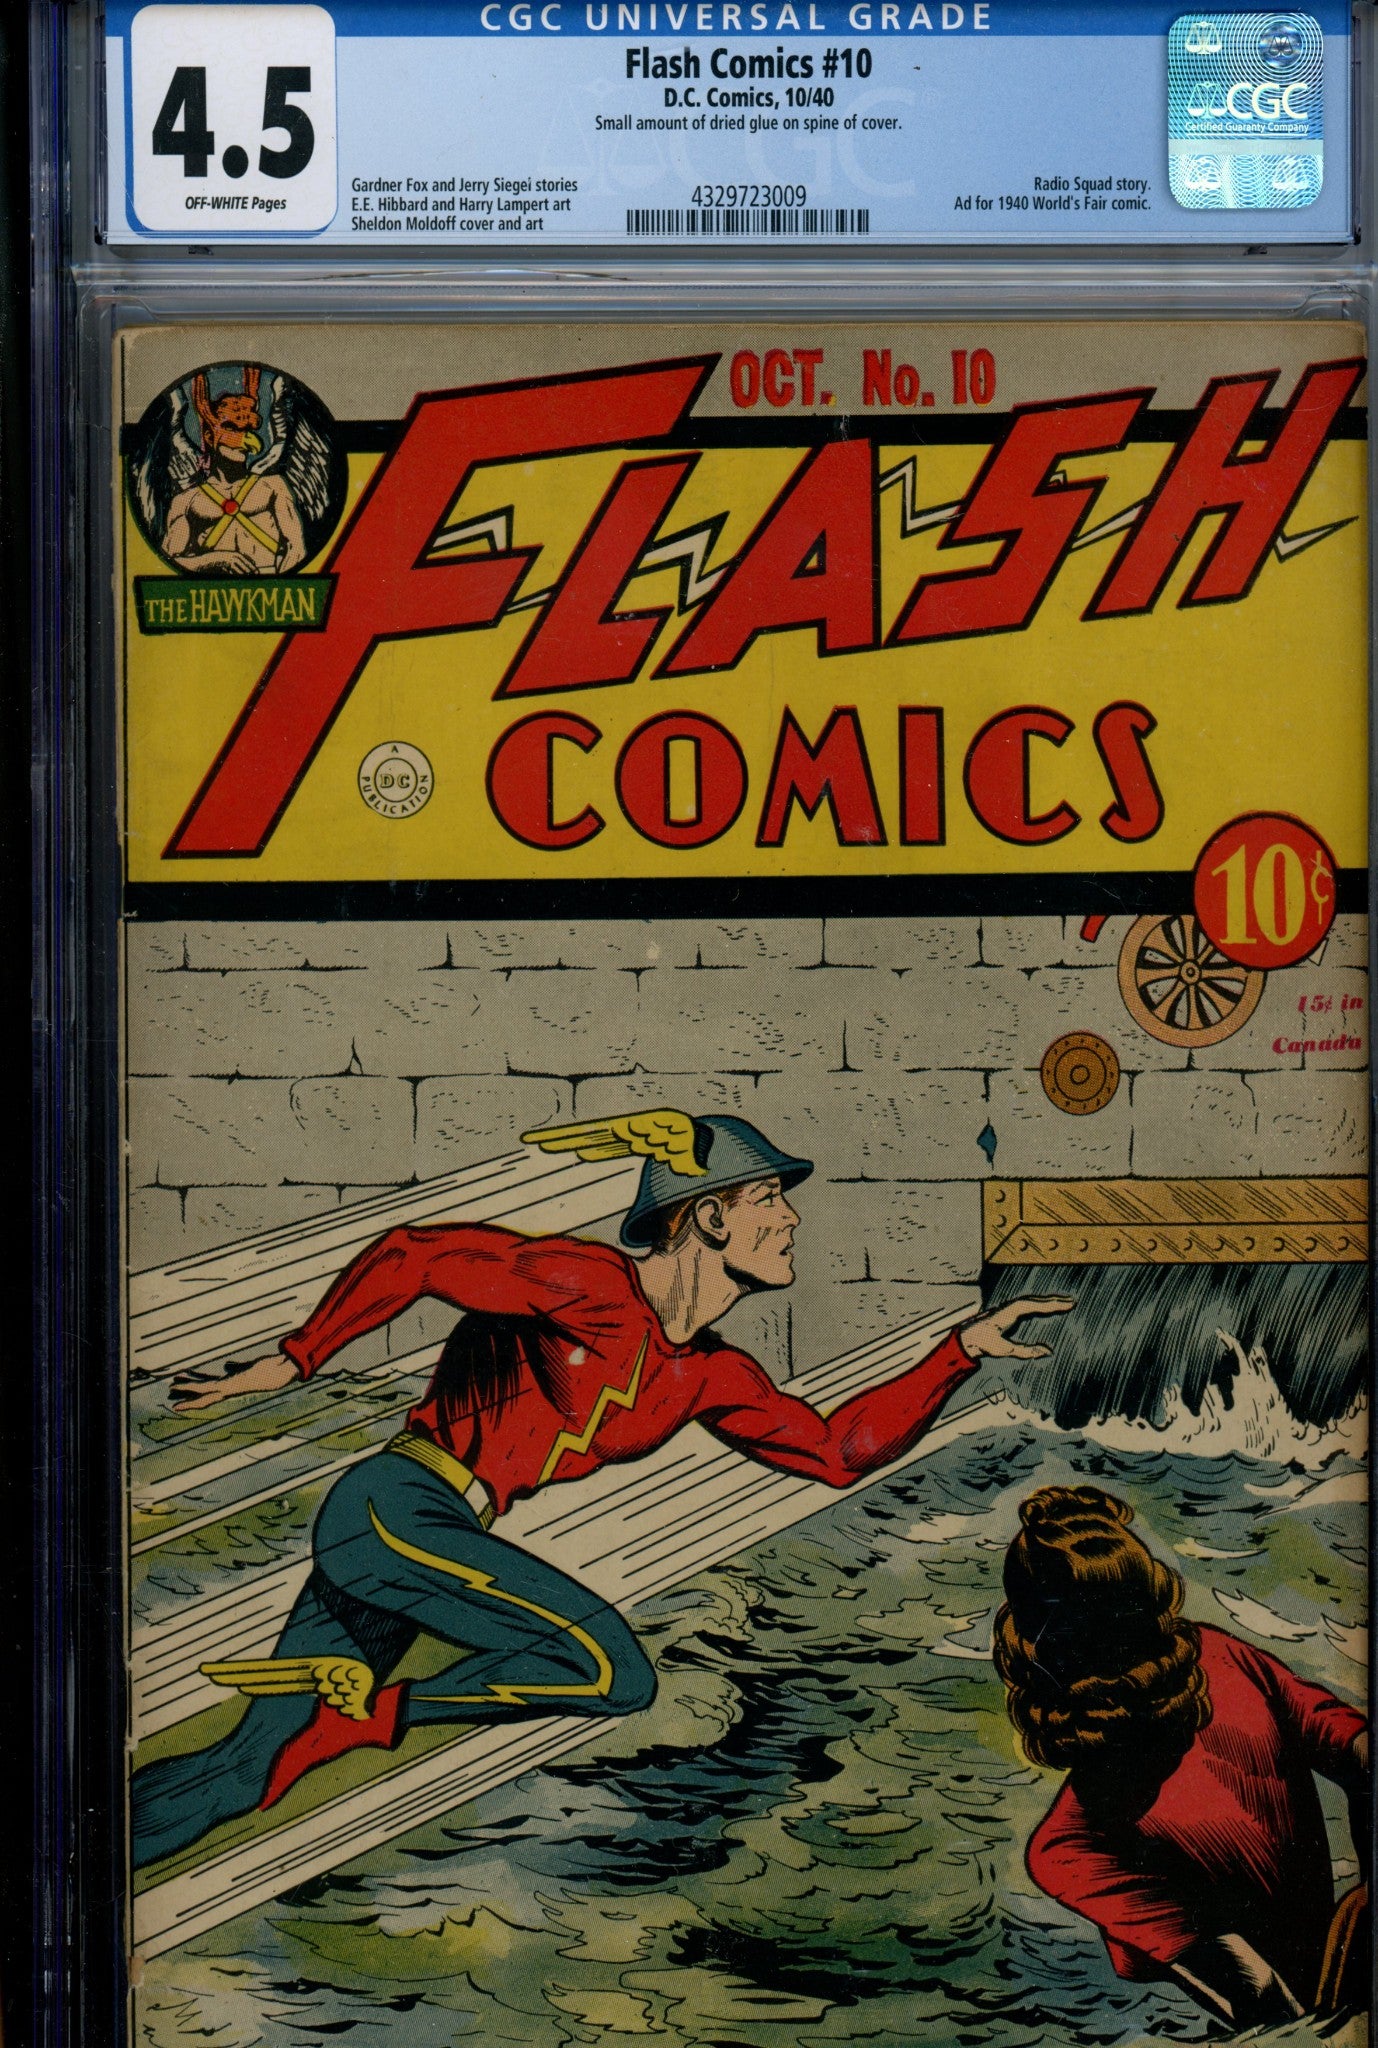 Flash Comics Vol 1 10 CGC 4.5 (VG+) Small Amount of Dried Glue on Spine (1940)